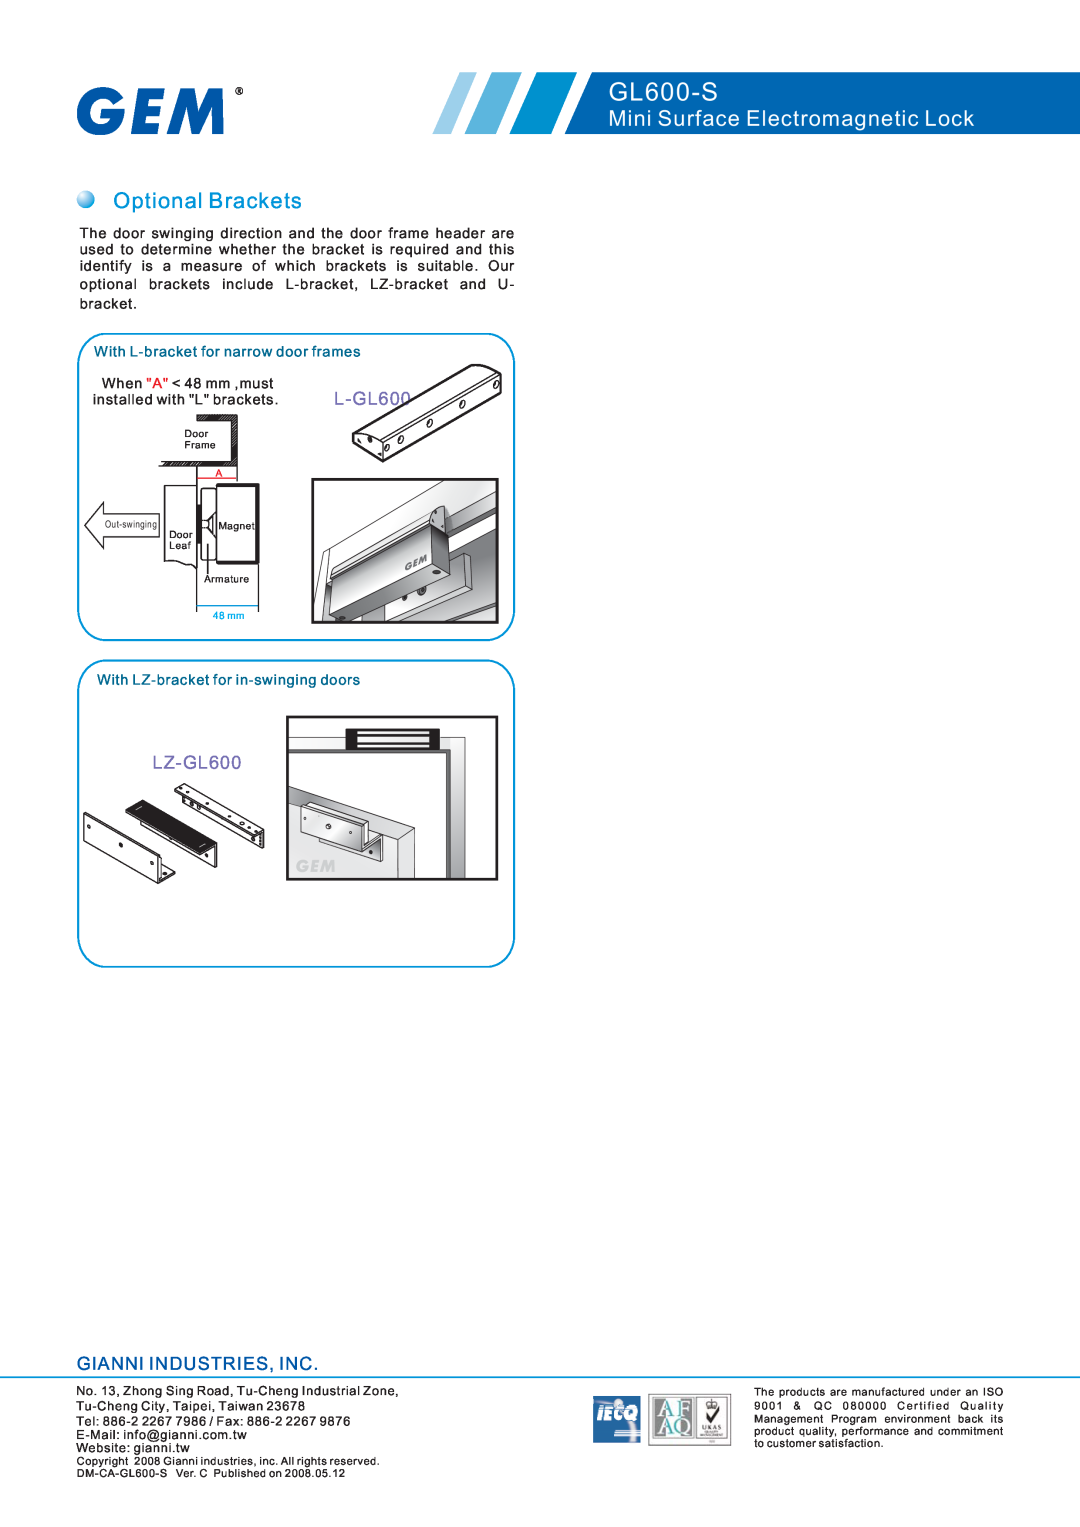 Gianni Industries GL600-S Optional Brackets, Mini Surface Electromagnetic Lock, L-GL600, LZ-GL600, Gianni Industries, Inc 